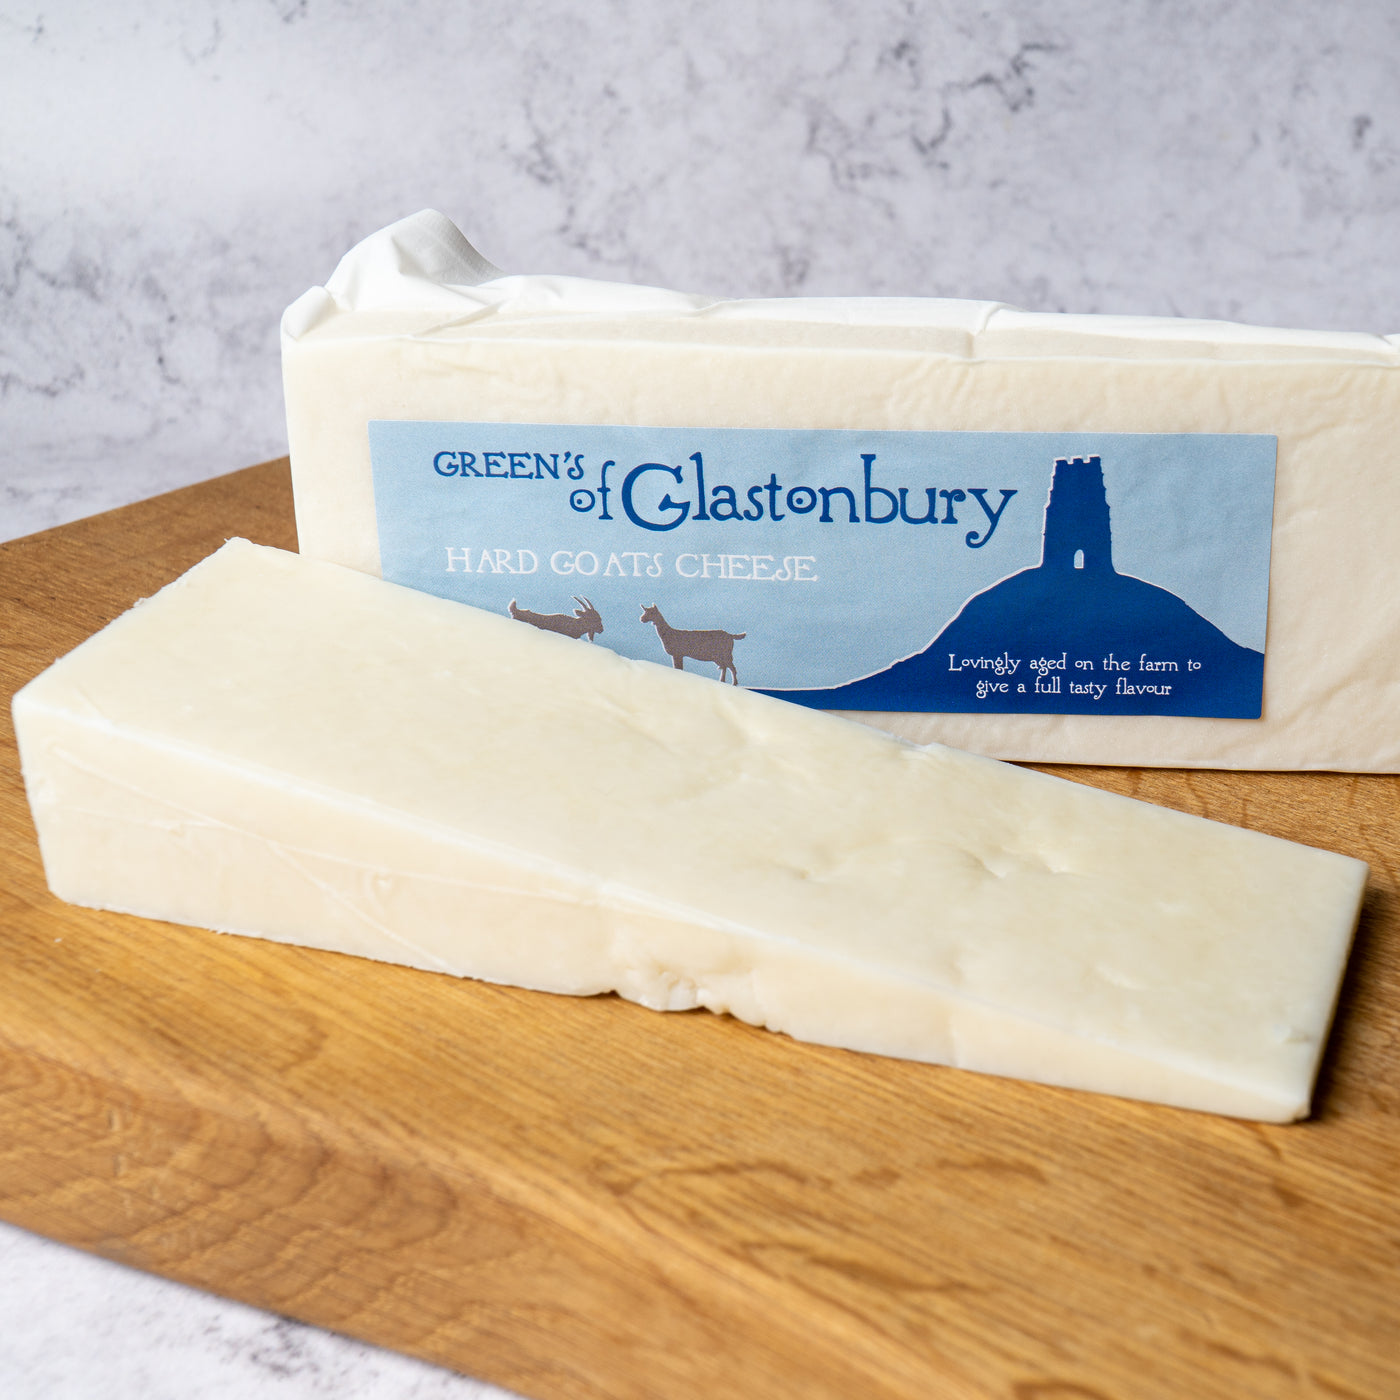 Hard Goats Cheese - Greens of Glastonbury - The Cheese Market 